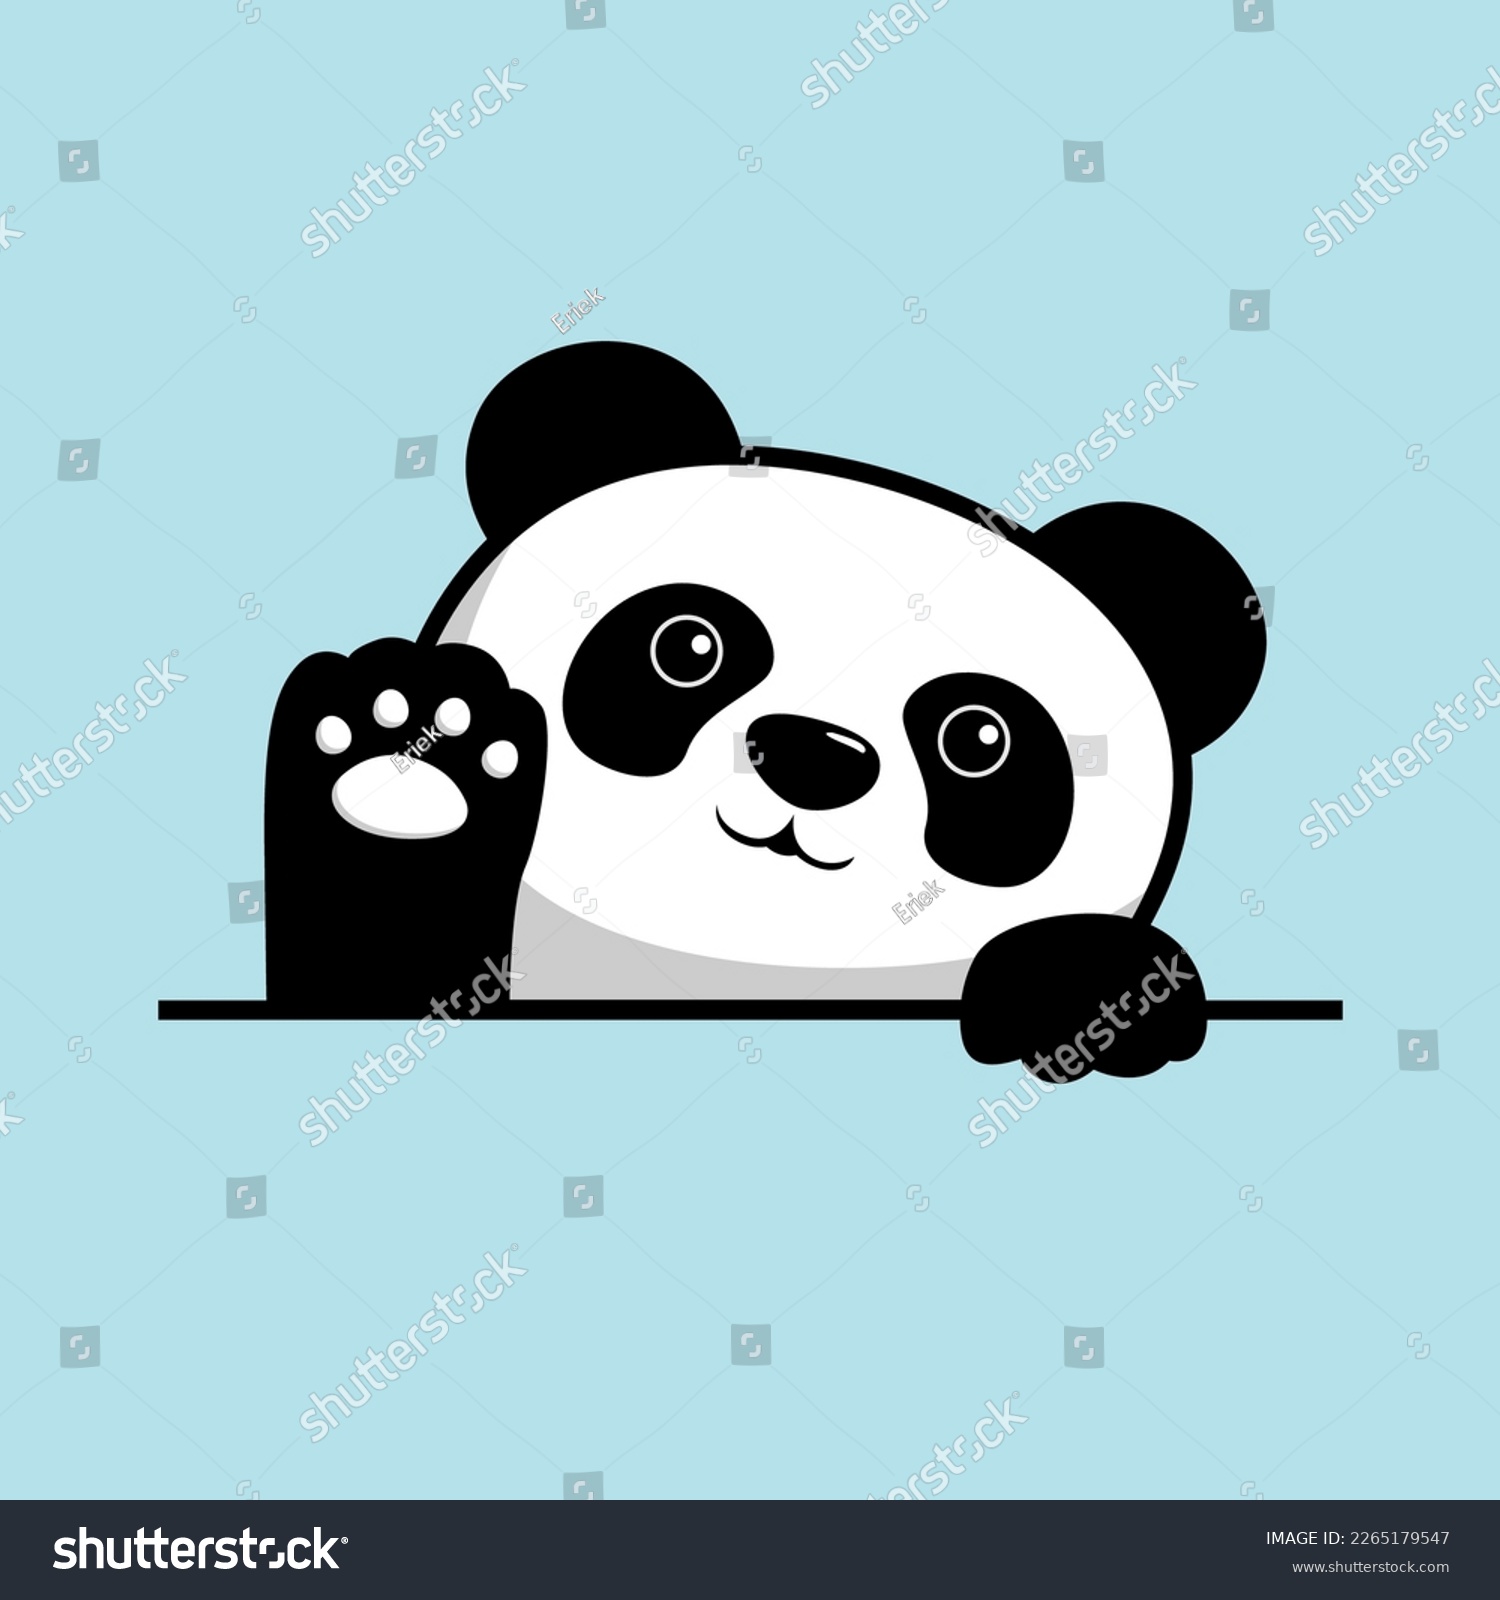 SVG of panda cartoon waving paw hand svg